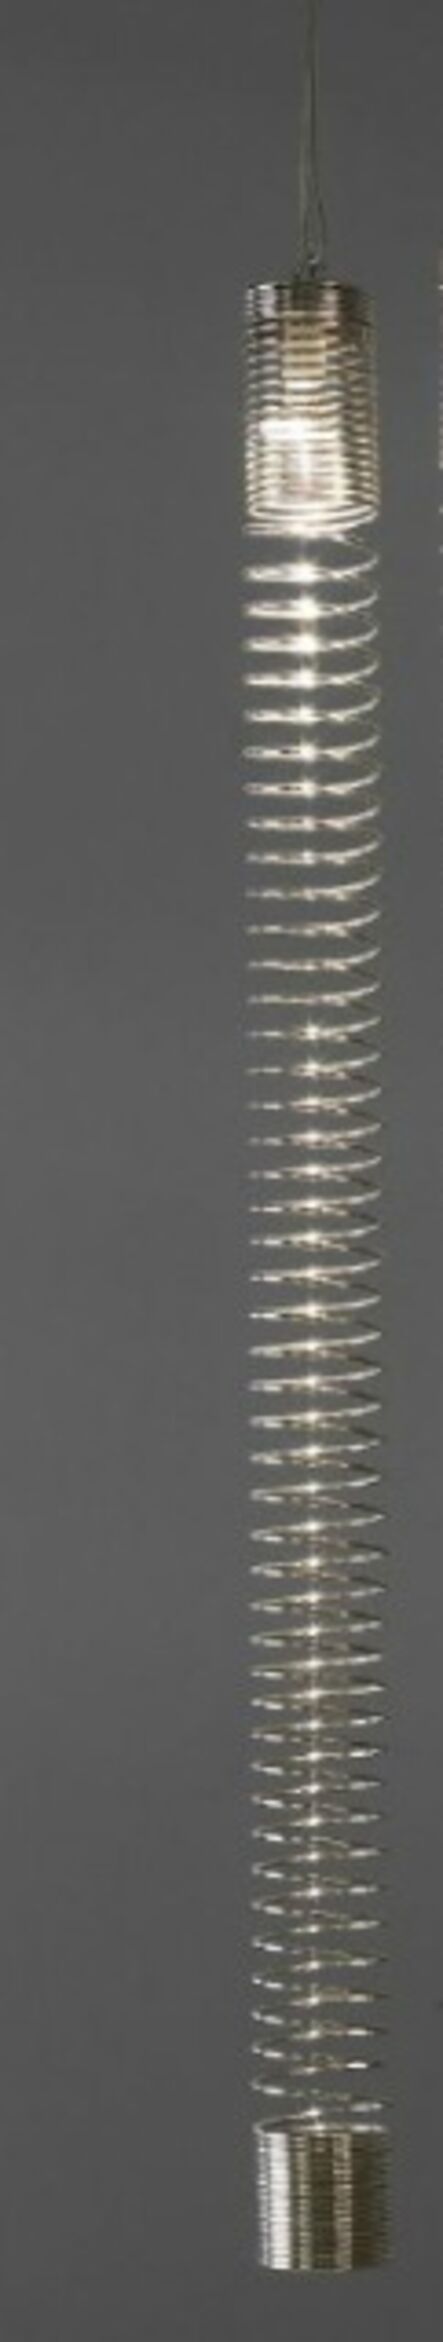 Angelo Mangiarotti, ‘Spiral Hanging Lamp’, 1974